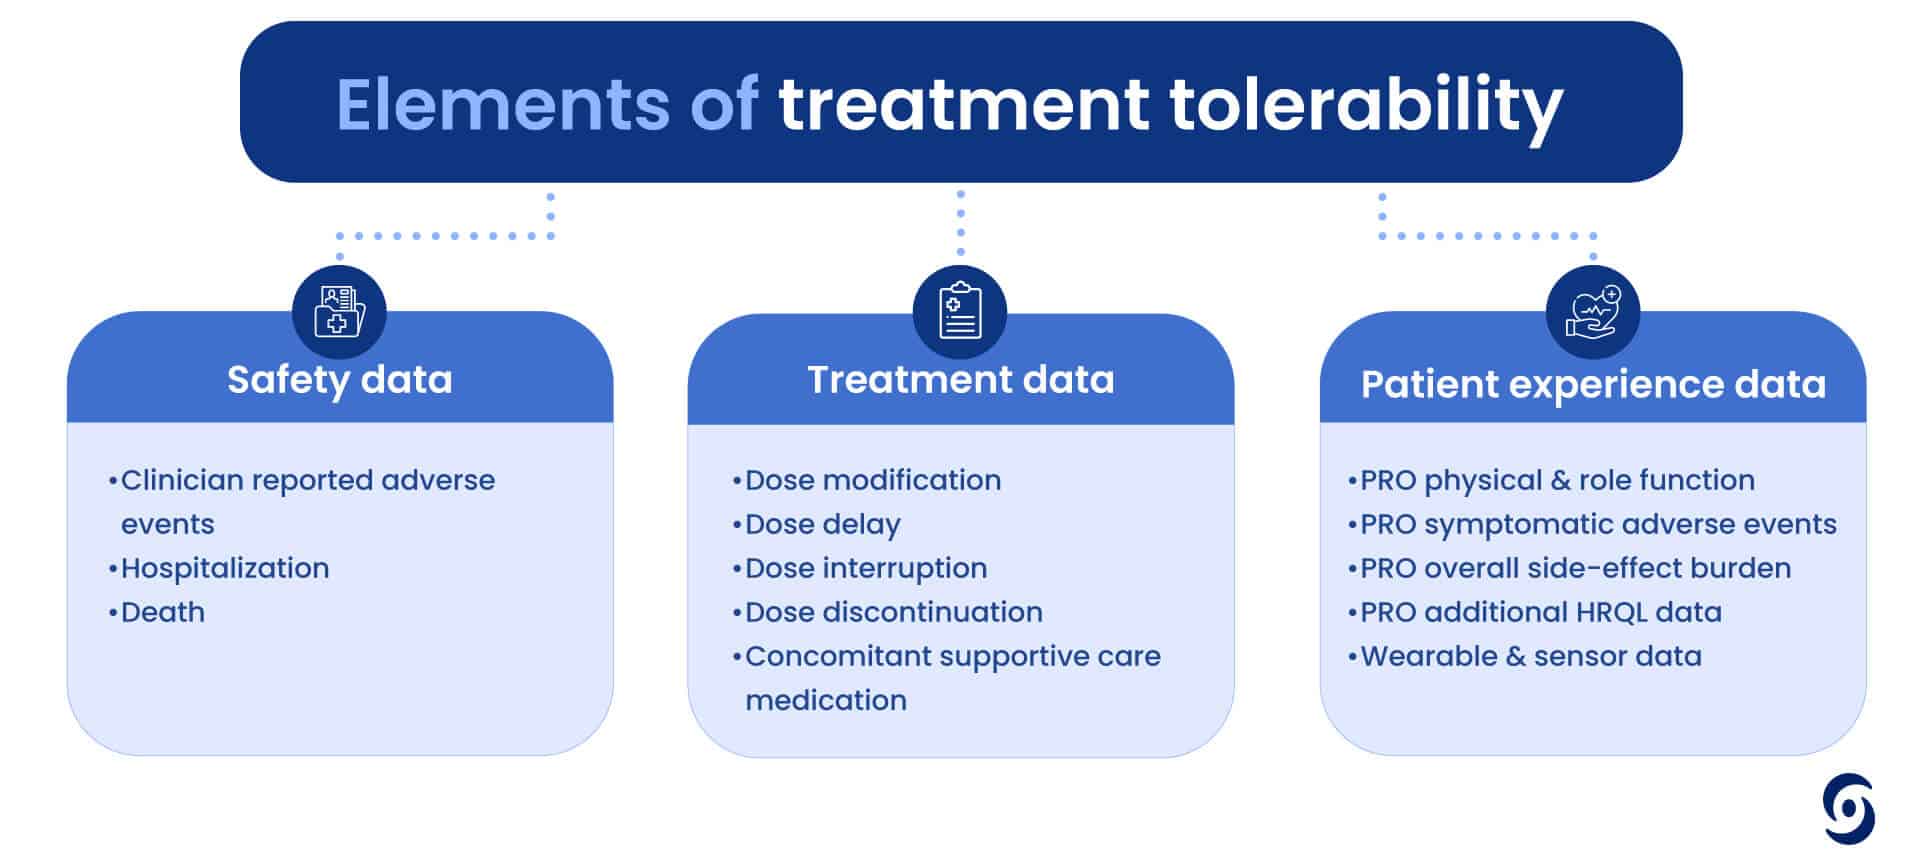 Elements of treatment tolerability